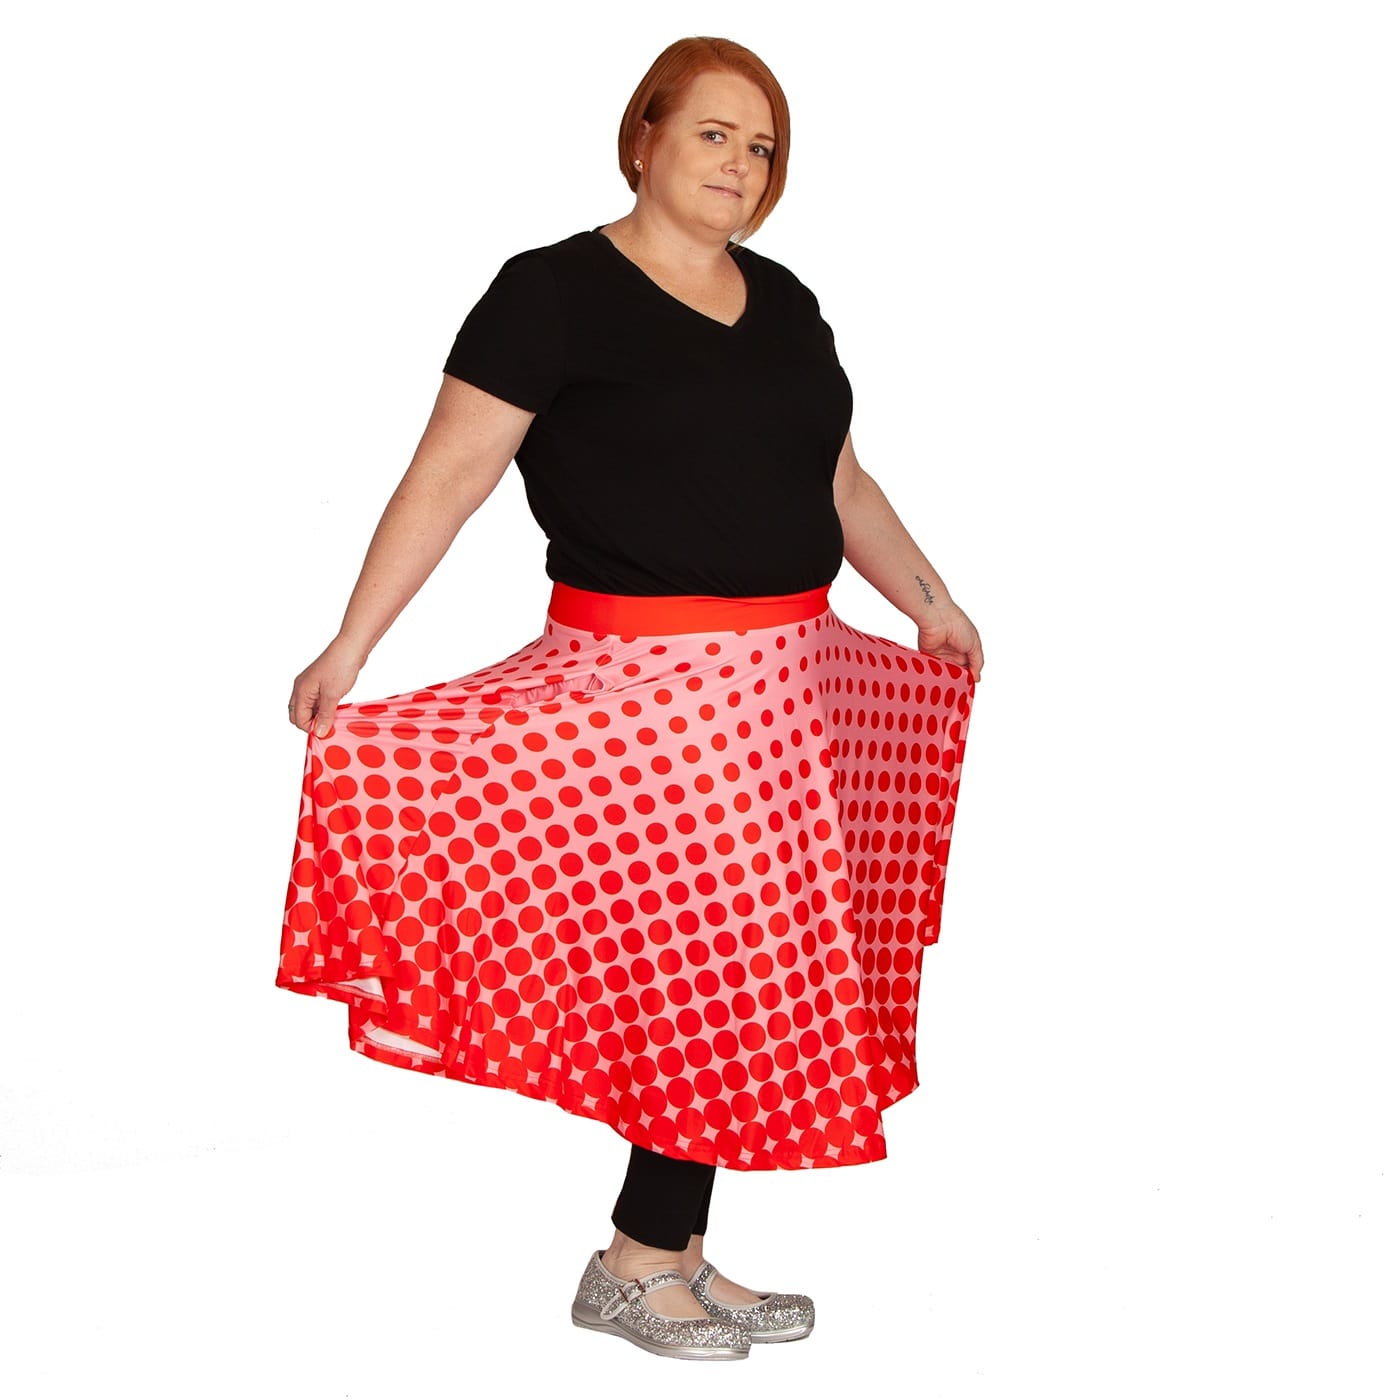 Blush Swishy Skirt by RainbowsAndFairies.com.au (Pink & Red - Polka Dot - Spots - Kitsch - Circle Skirt With Pockets - Mod Retro) - SKU: CL_SWISH_BLUSH_ORG - Pic-08